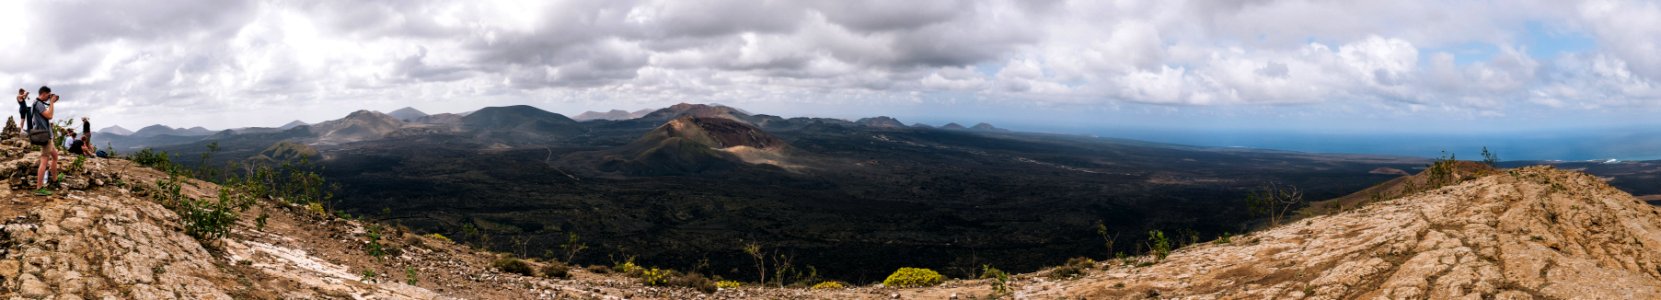 panorama photography of mountain range under cloudy sky photo